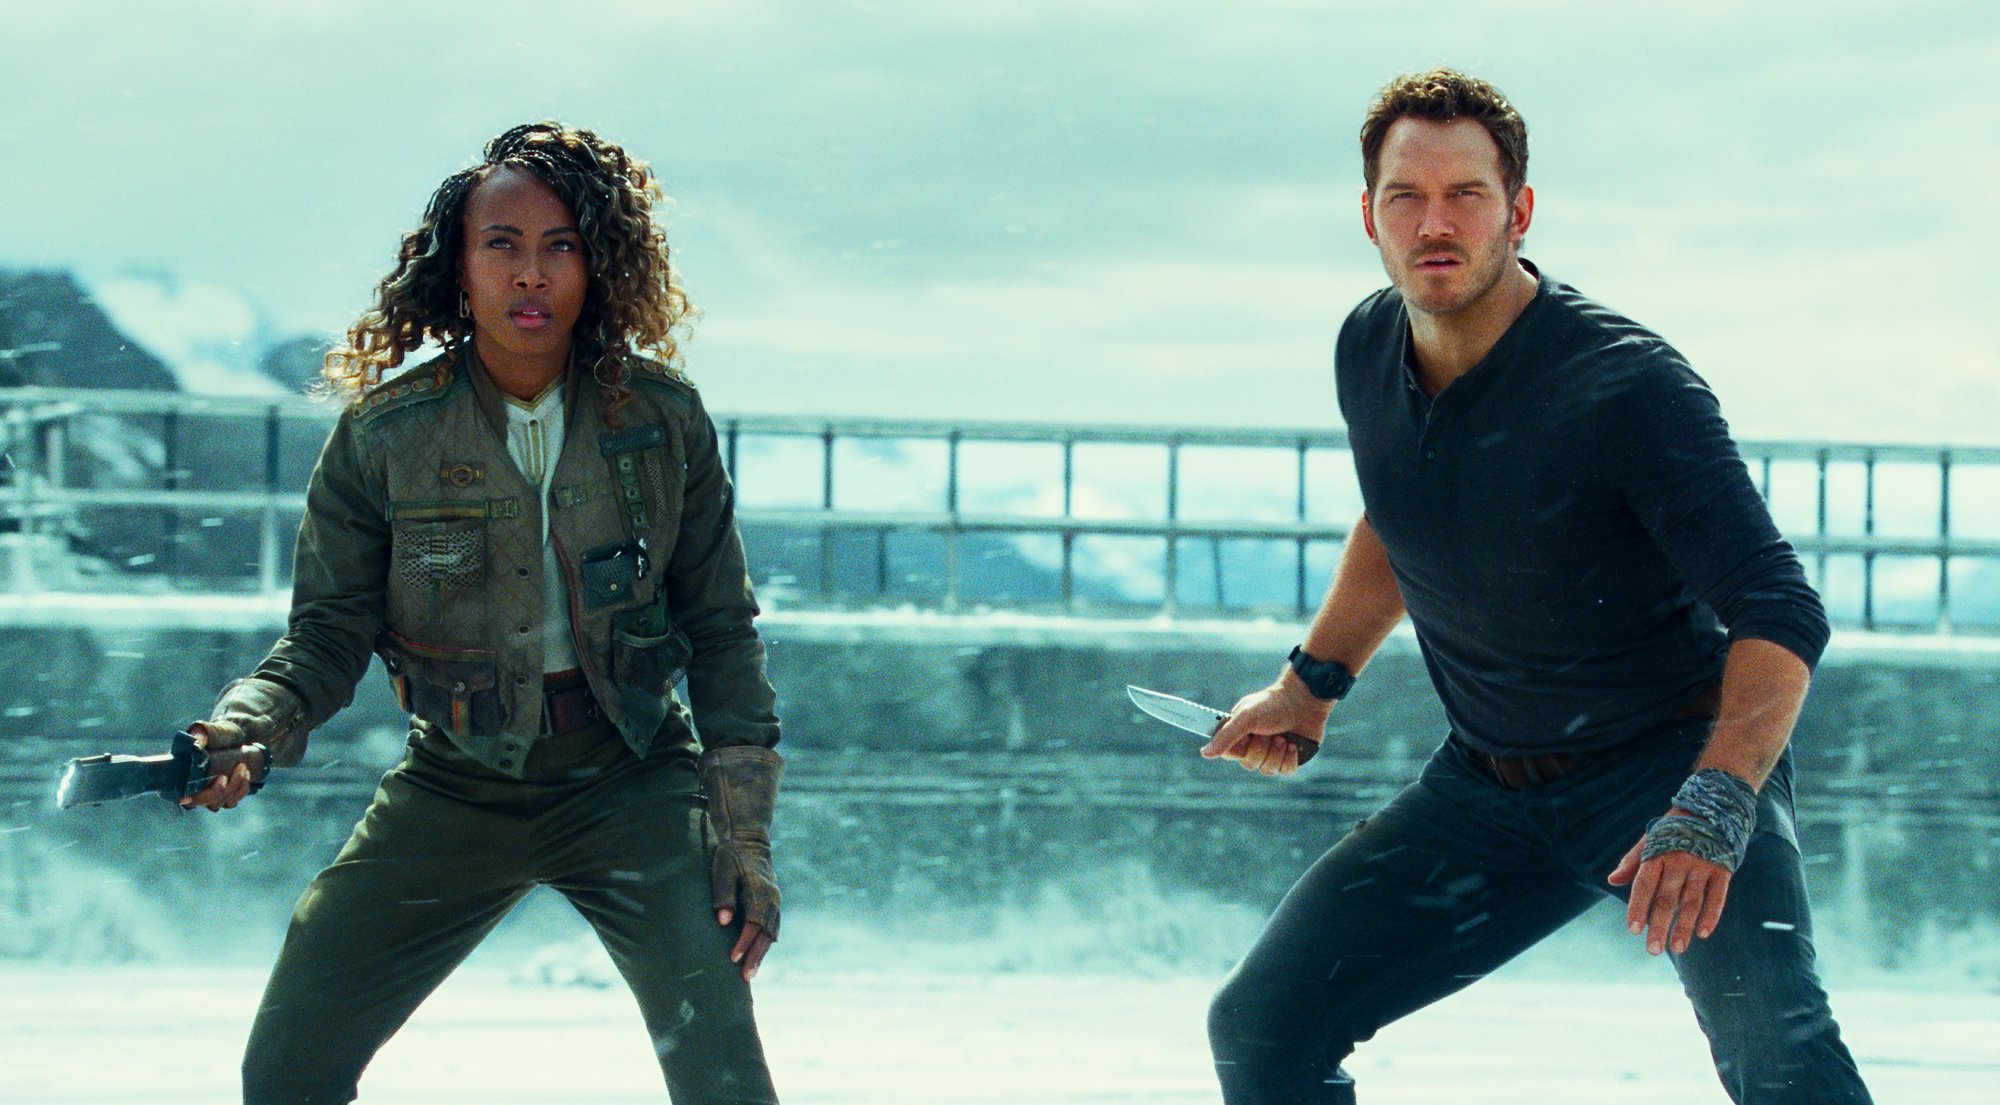 DeWanda Wise as Kayla Watts and Chris Pratt as Owen Grady hold knives ready to fight in a scene from Jurassic World: Dominion